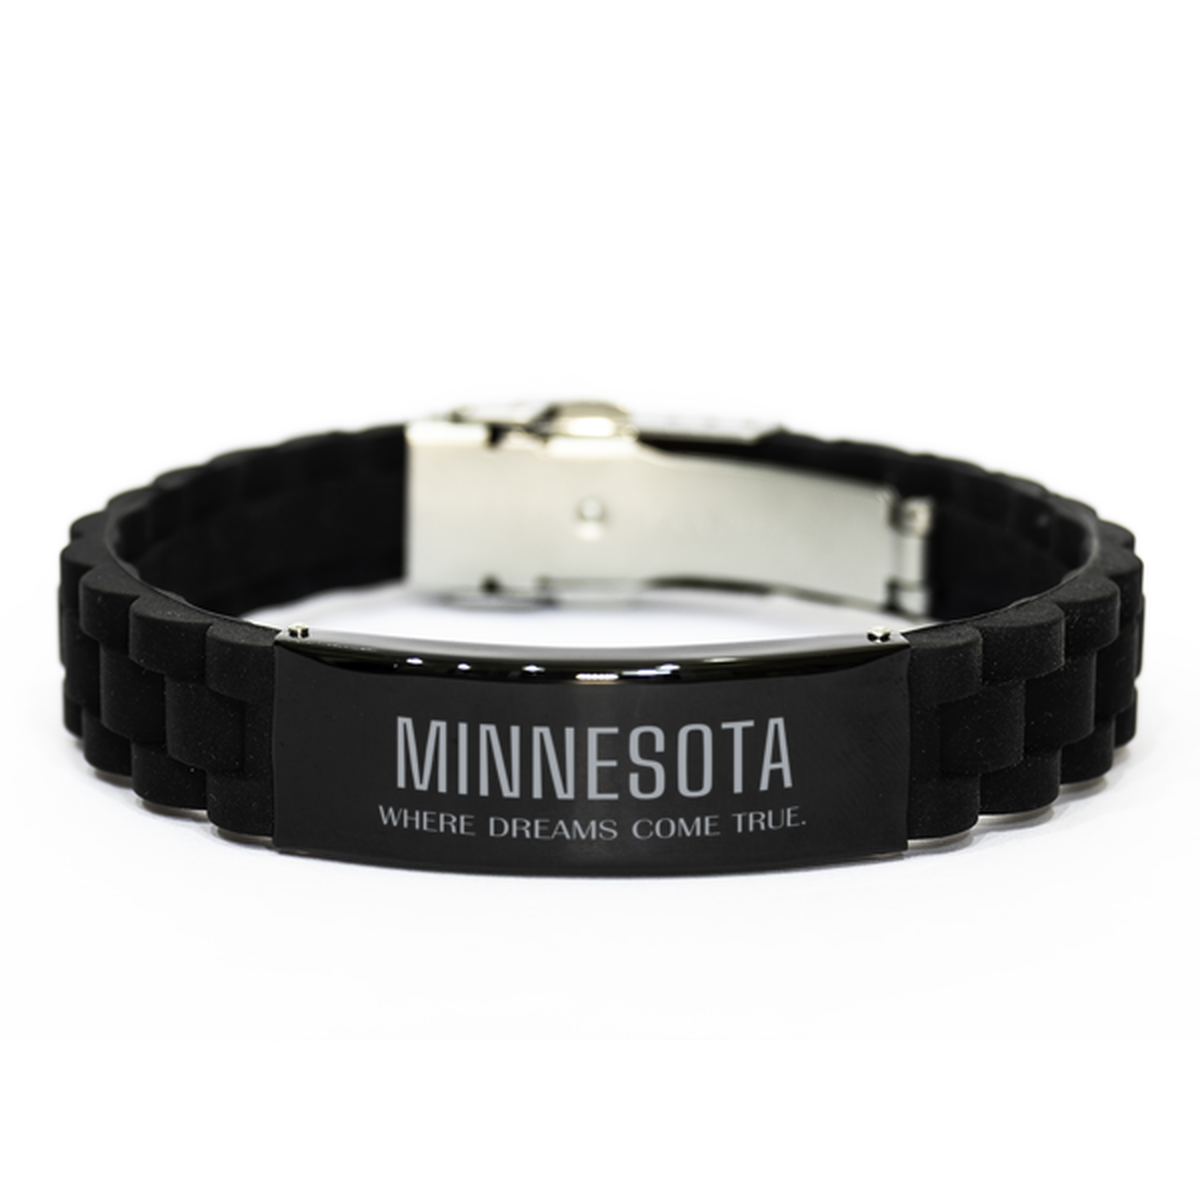 Love Minnesota State Black Glidelock Clasp Bracelet, Minnesota Where dreams come true, Birthday Inspirational Gifts For Minnesota Men, Women, Friends